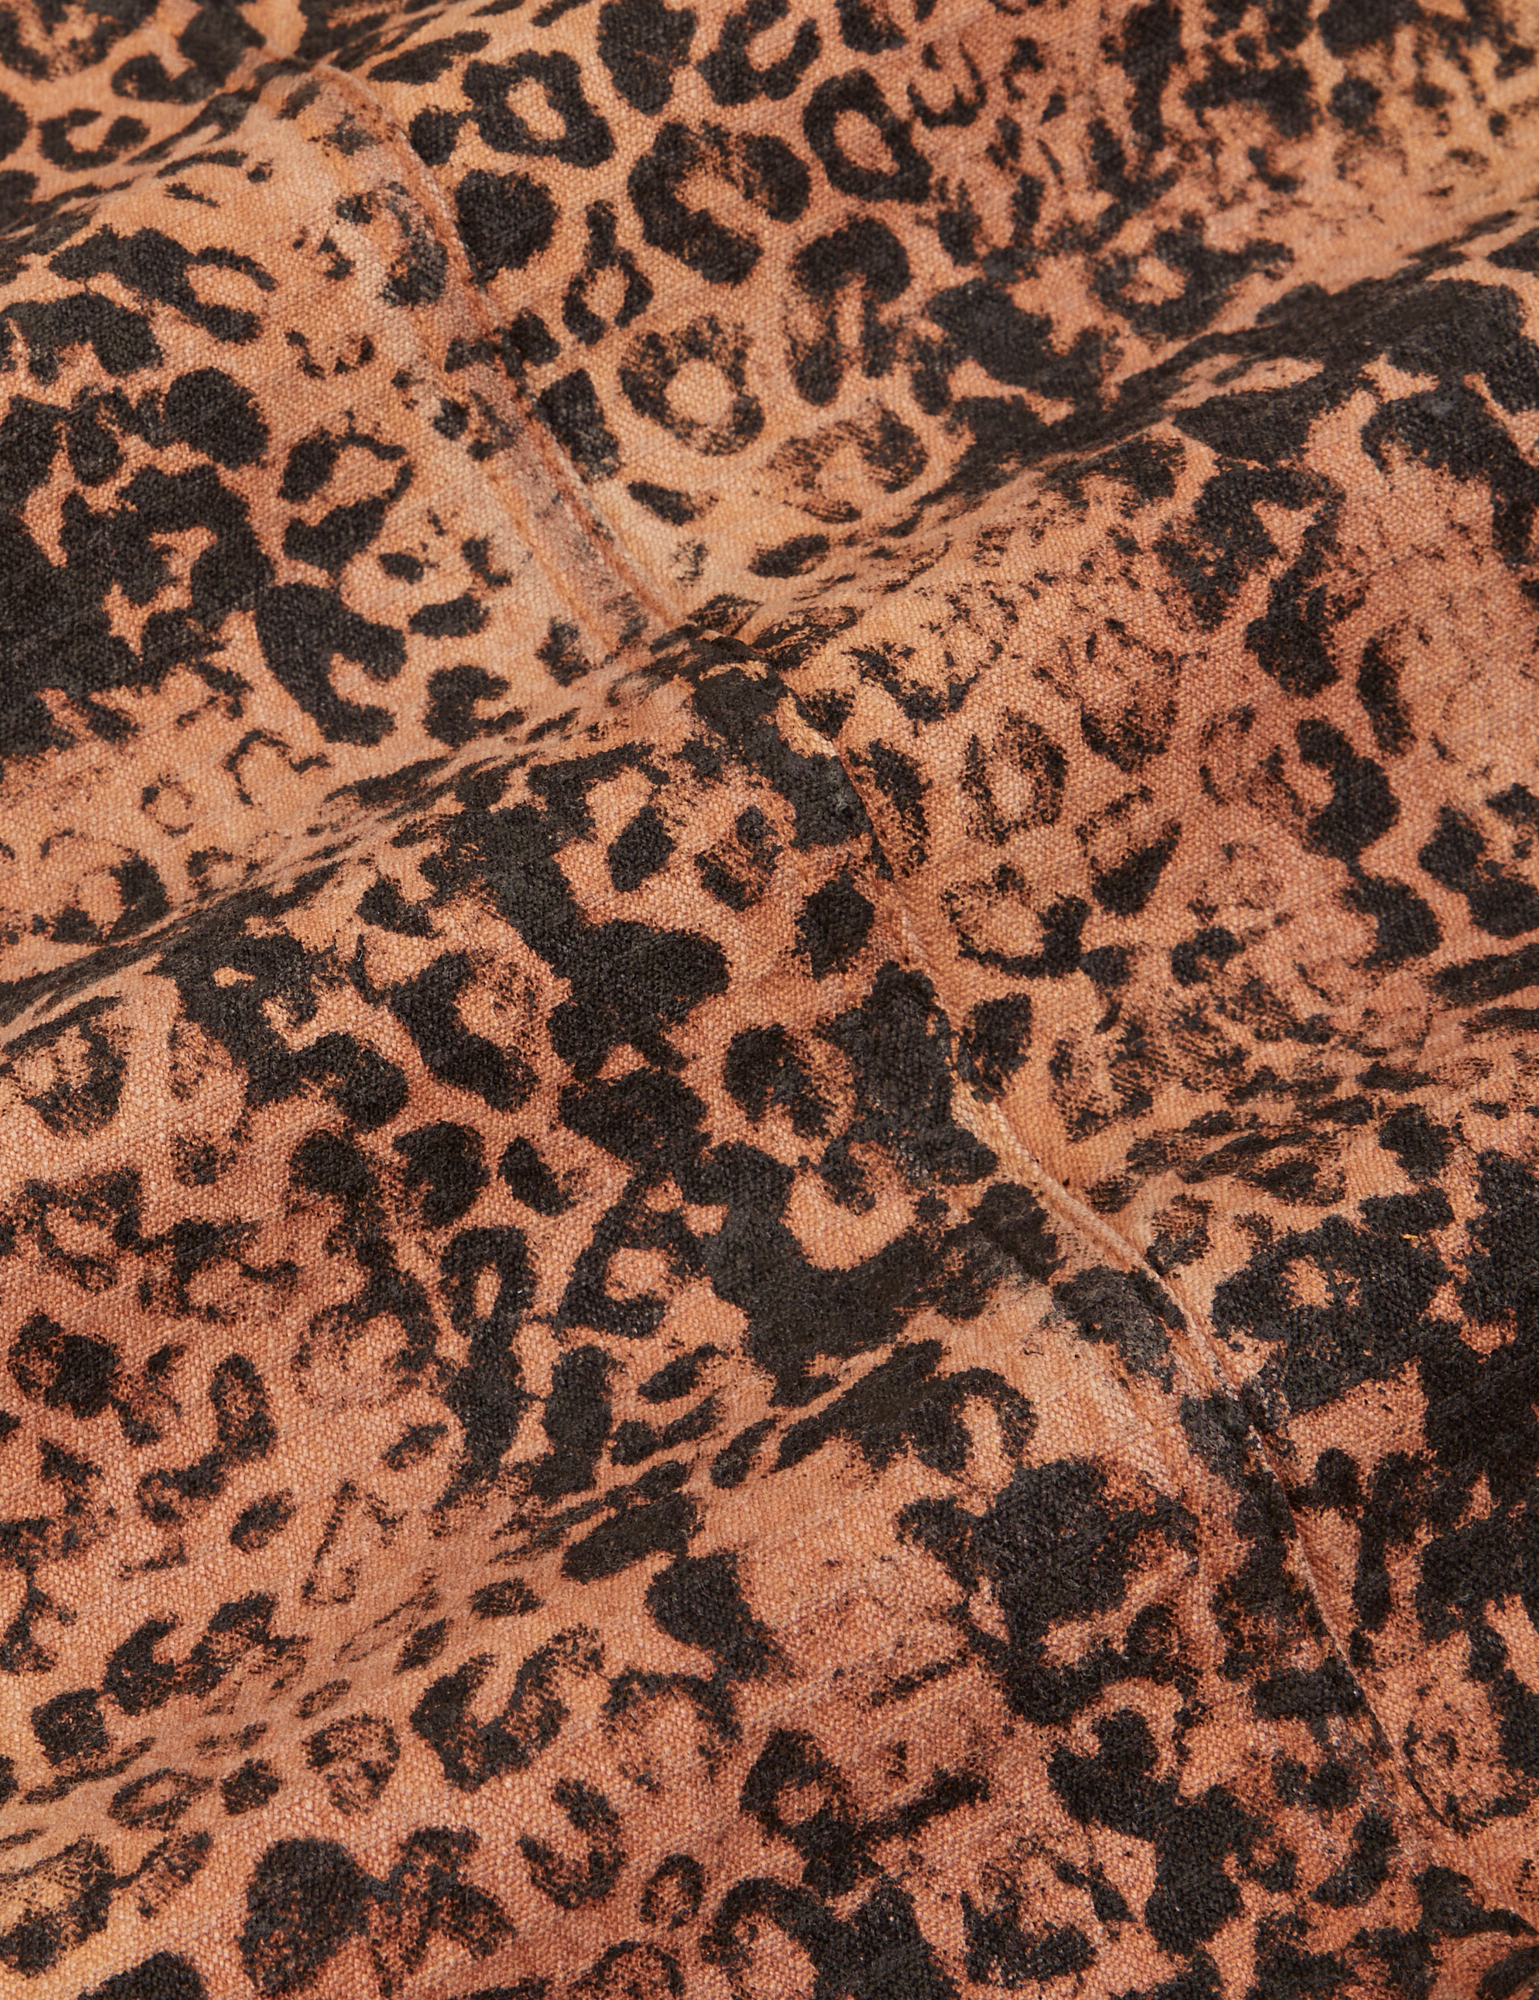 Field Coat in Leopard Print fabric detail close up